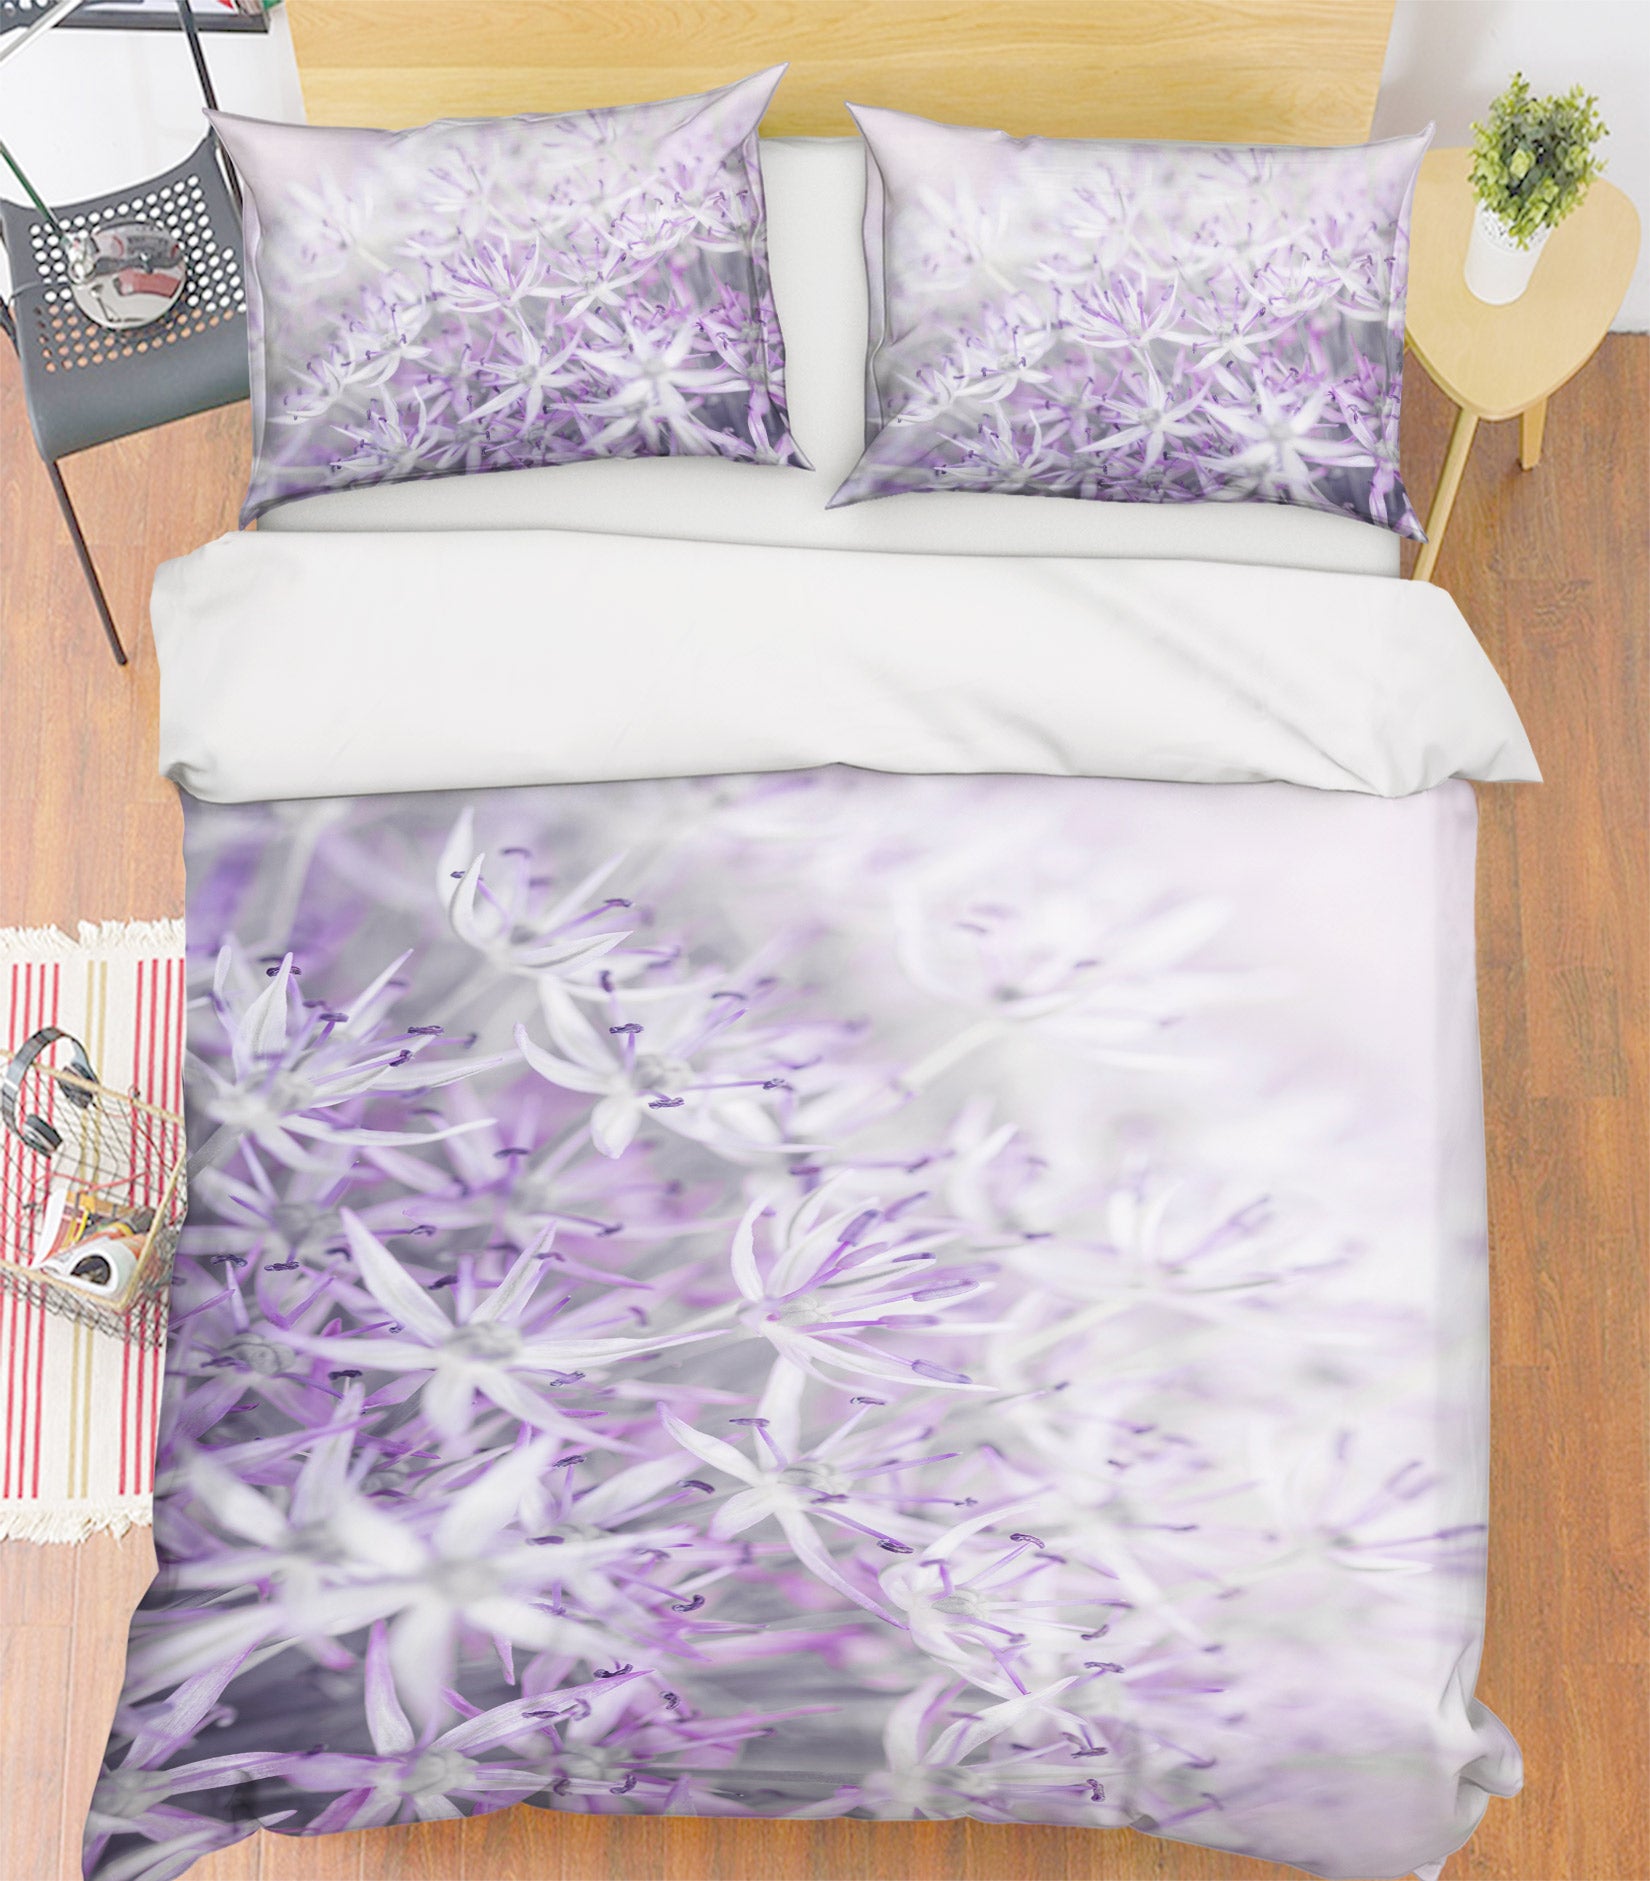 3D Purple Flower 6963 Assaf Frank Bedding Bed Pillowcases Quilt Cover Duvet Cover